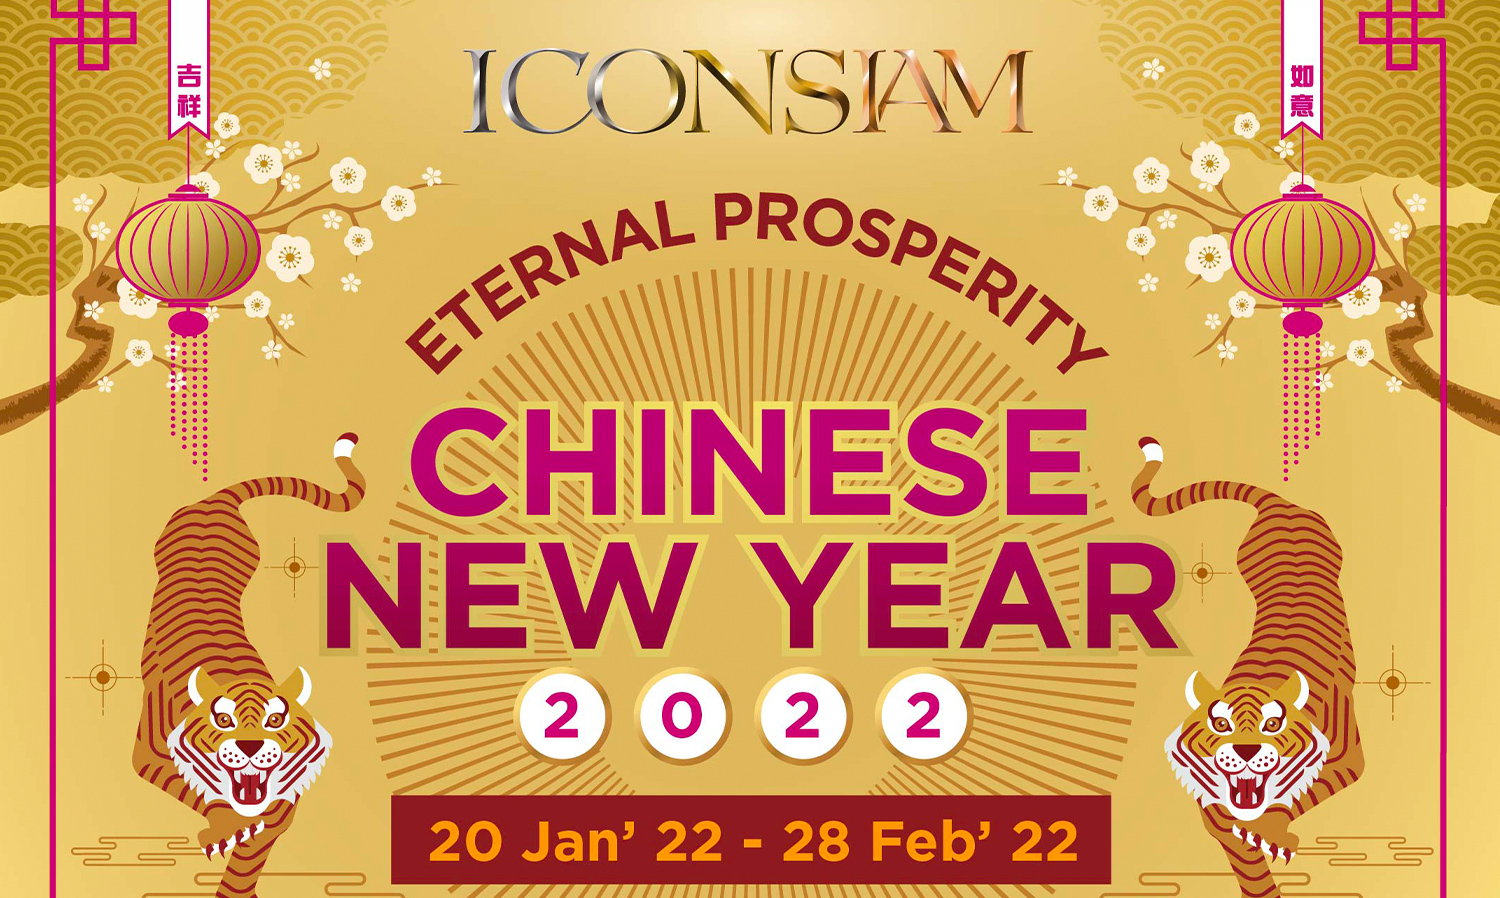  THE ICONSIAM ETERNAL PROSPERITY CHINESE NEW YEAR 2022 วันนี้ – 28 ก.พ. ศกนี้